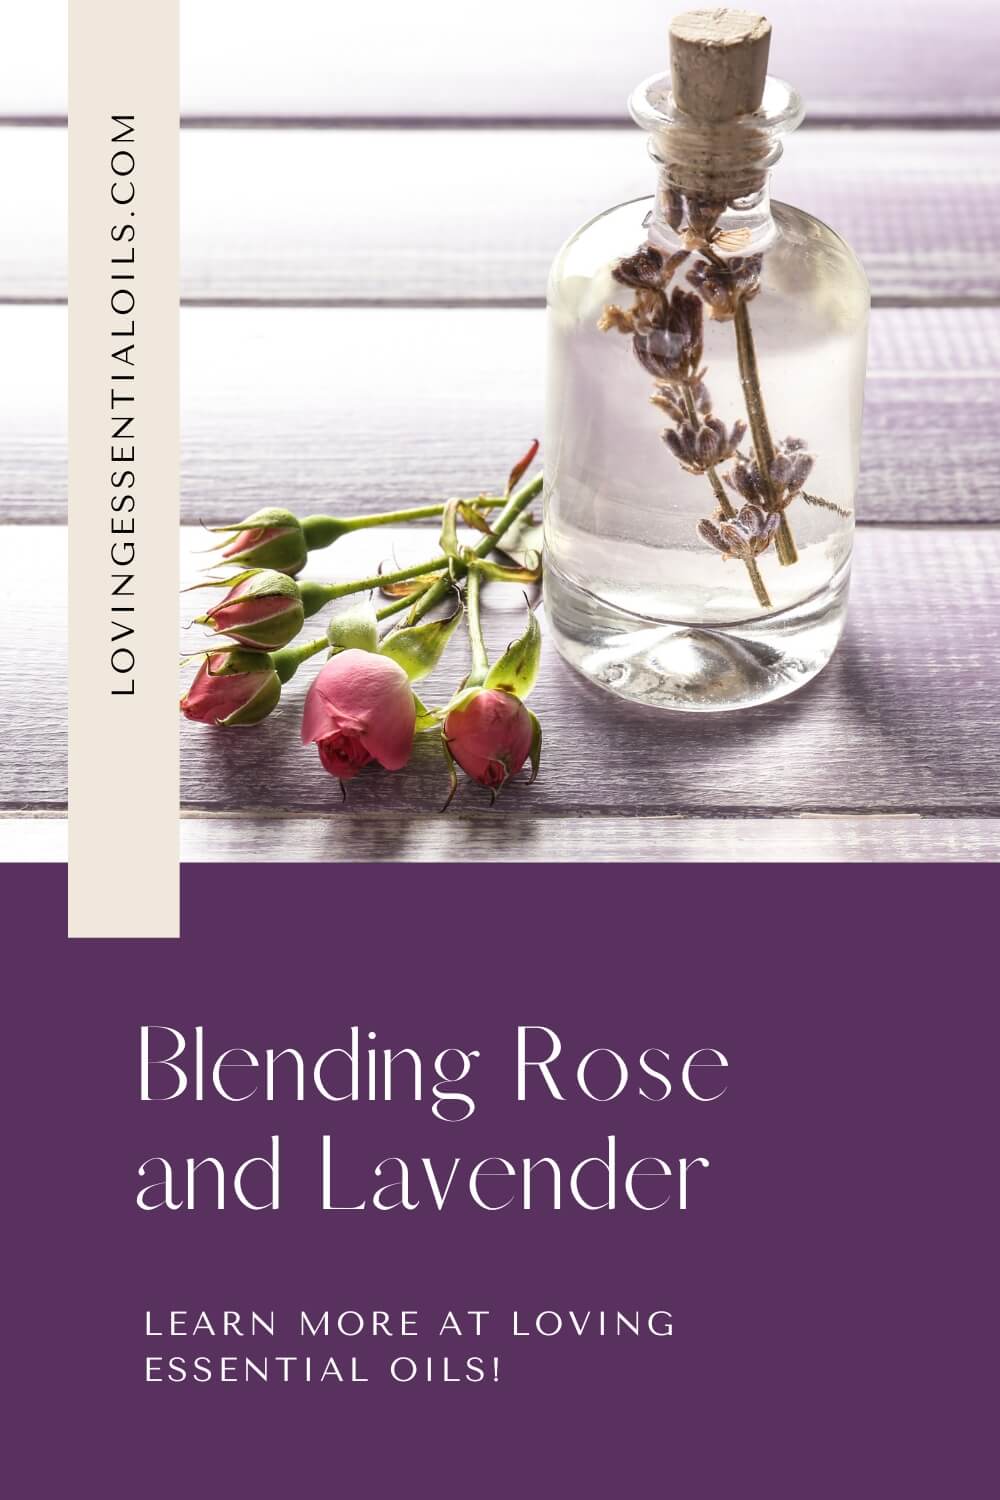 Blending Rose and Lavender by Loving Essential Oils